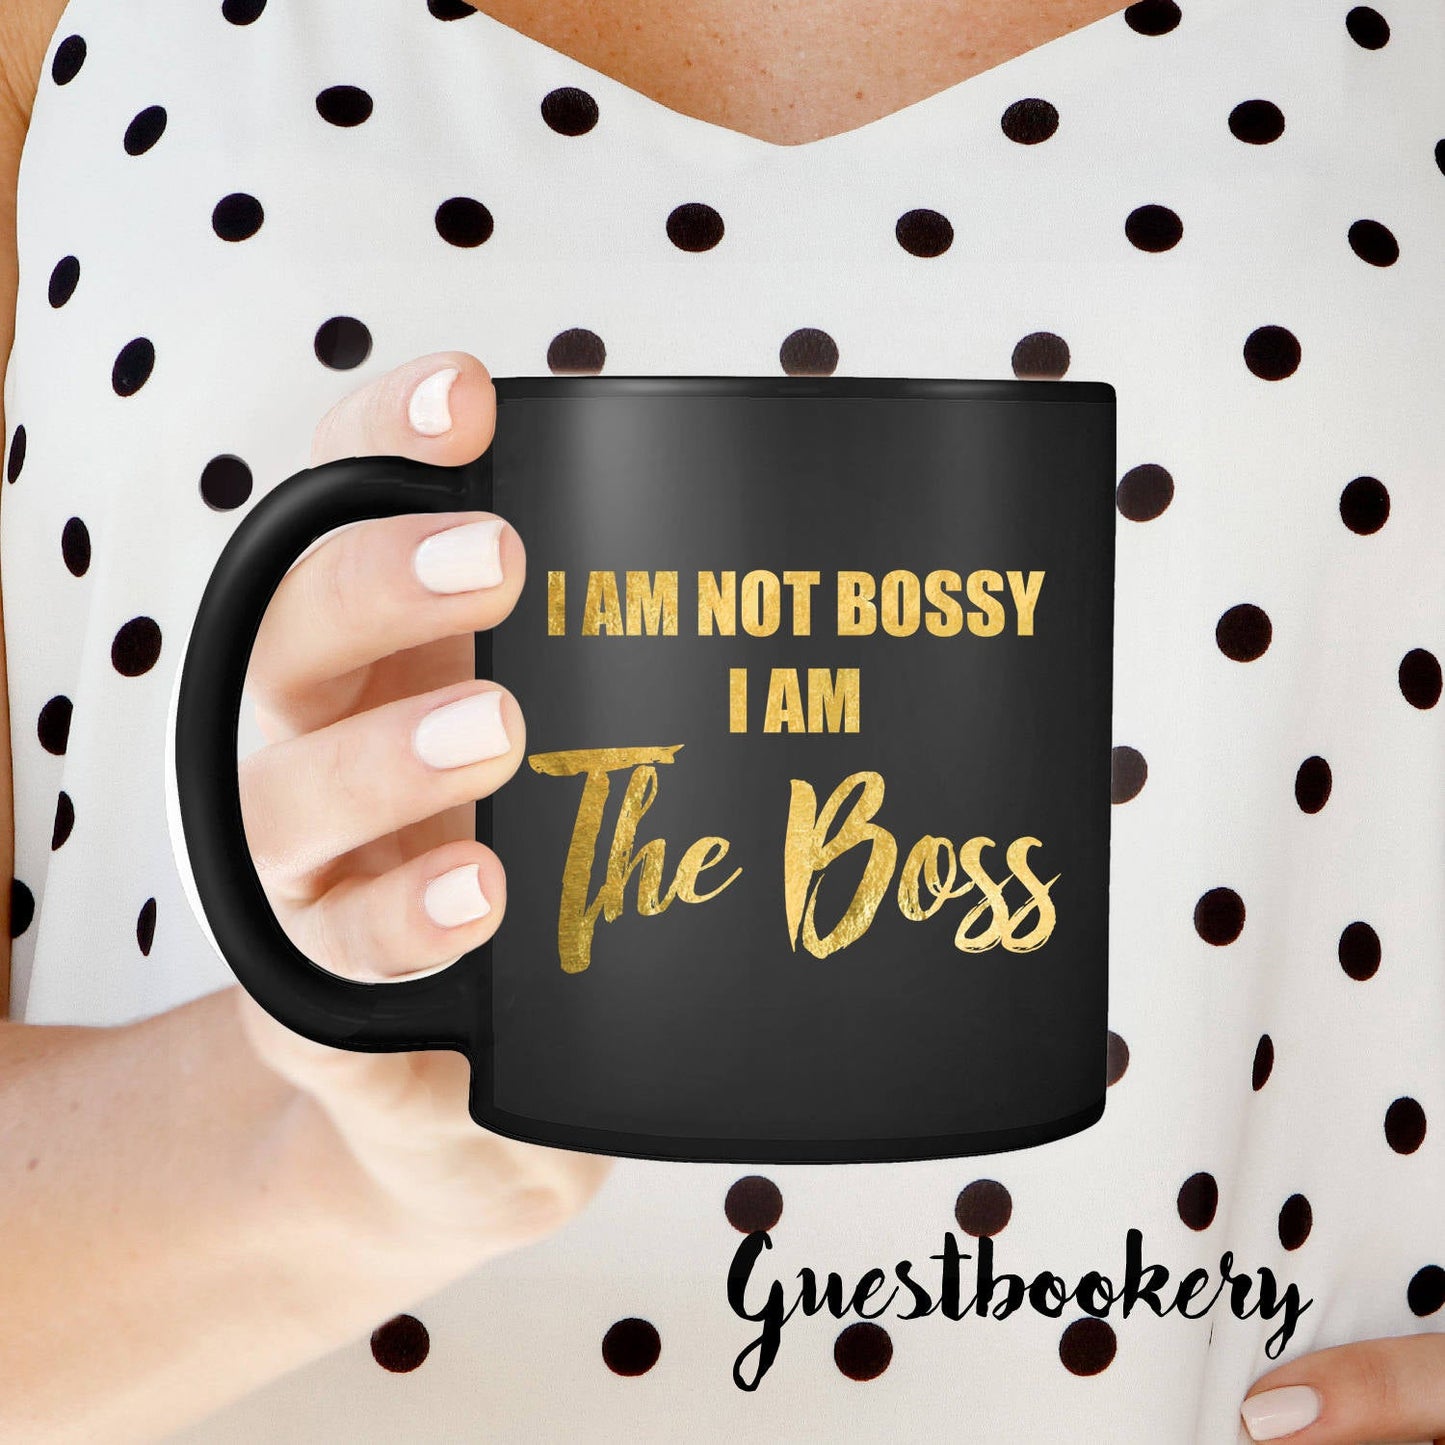 I'm Not Bossy I am The Boss Mug